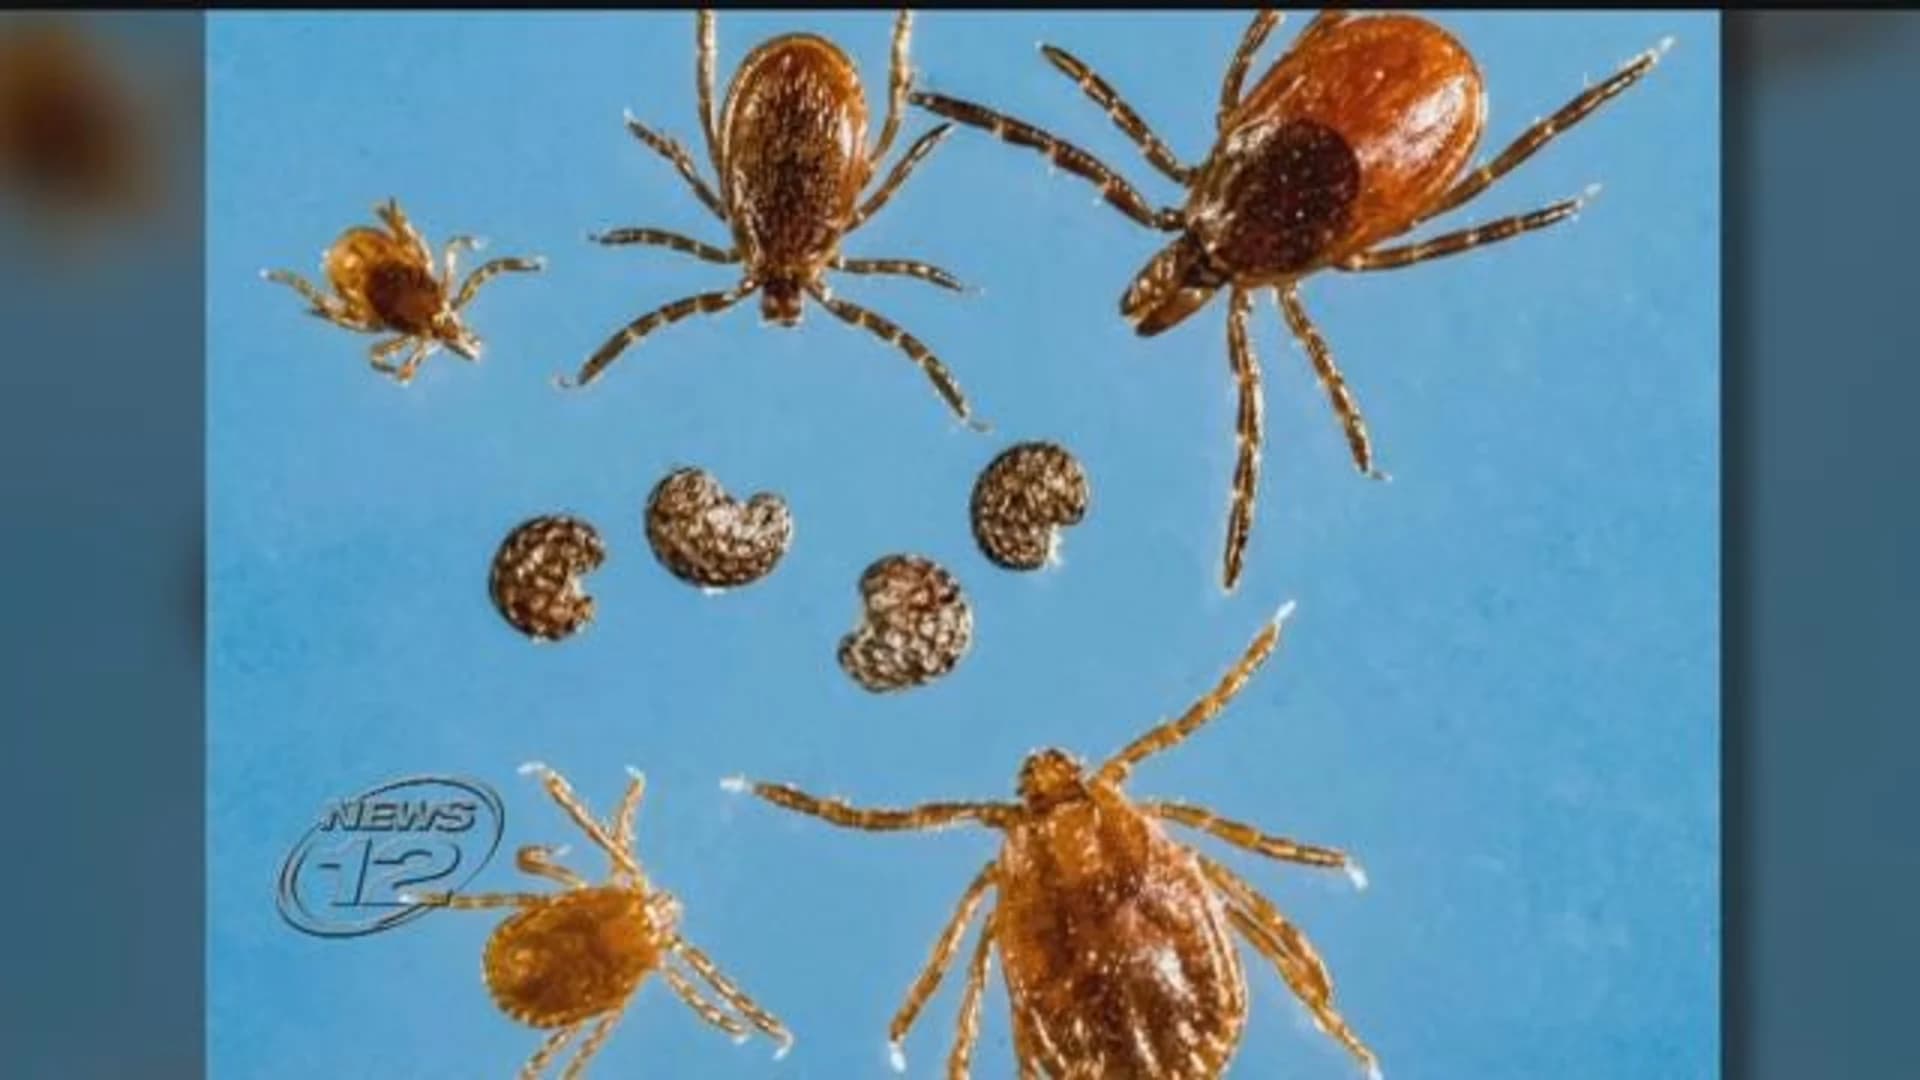 New species of tick found in locations around Westchester